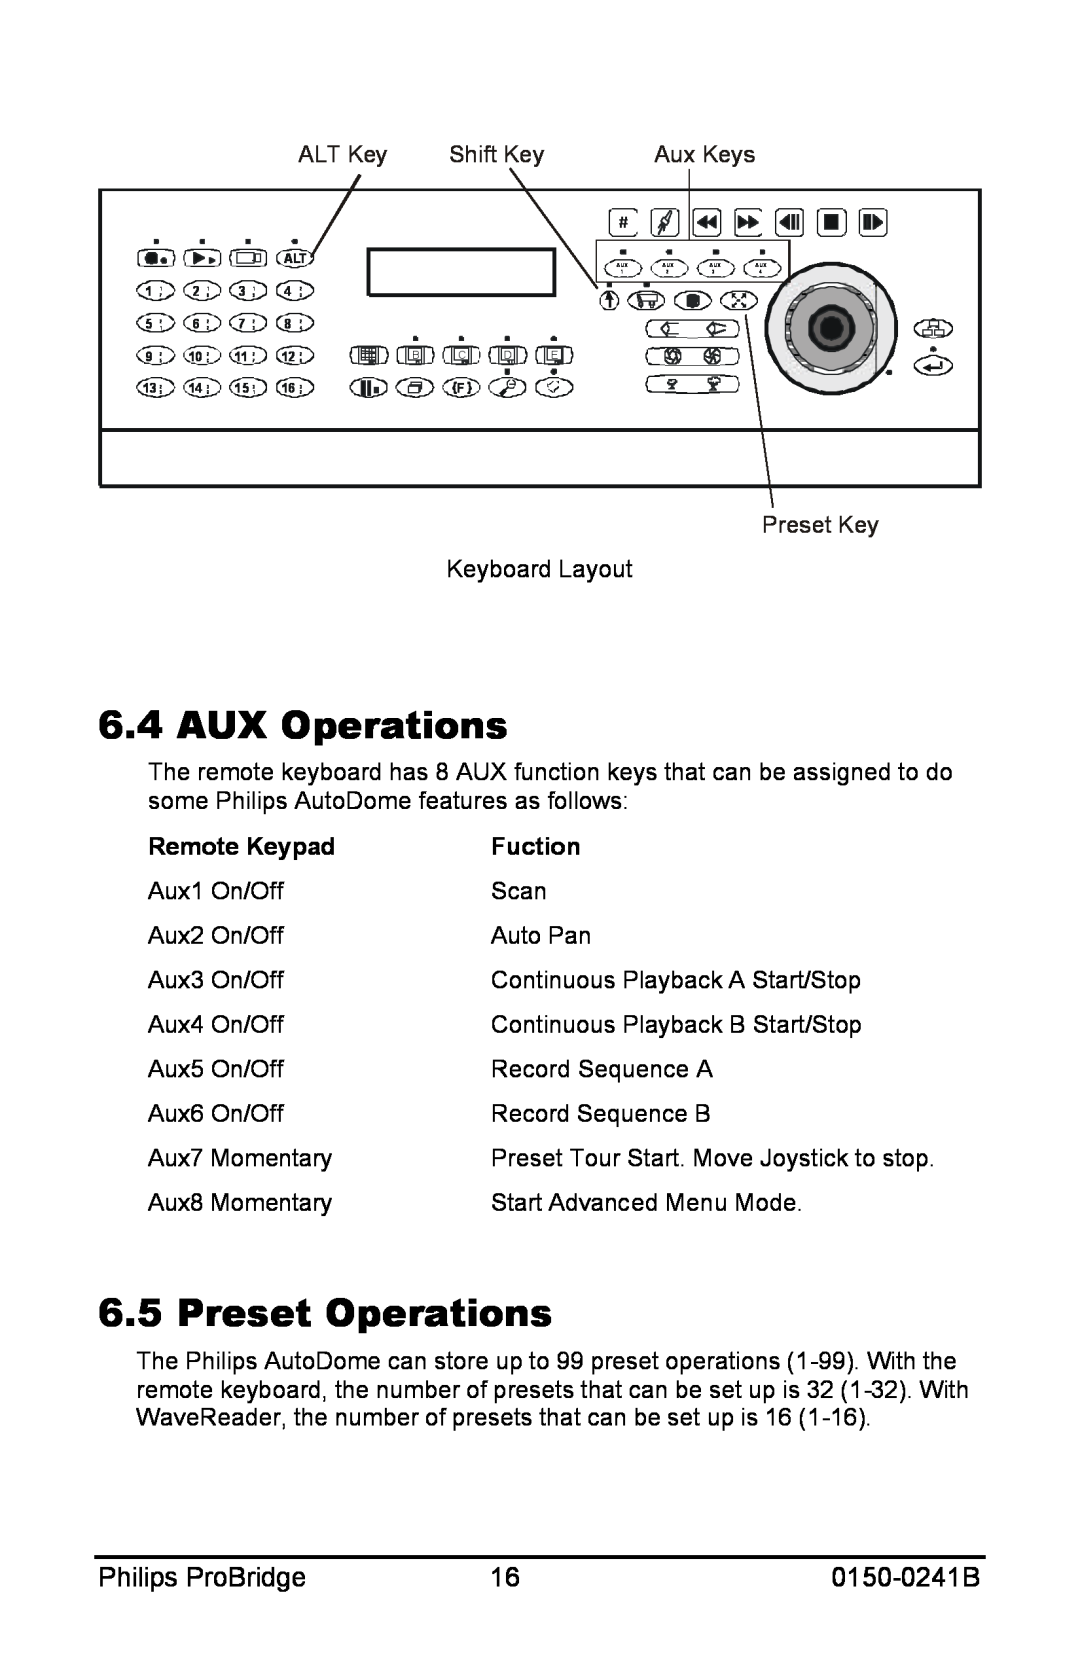 Philips 0150-0241B AUX Operations, Preset Operations, Philips ProBridge, ALT Key, Shift Key, Aux Keys, Preset Key 